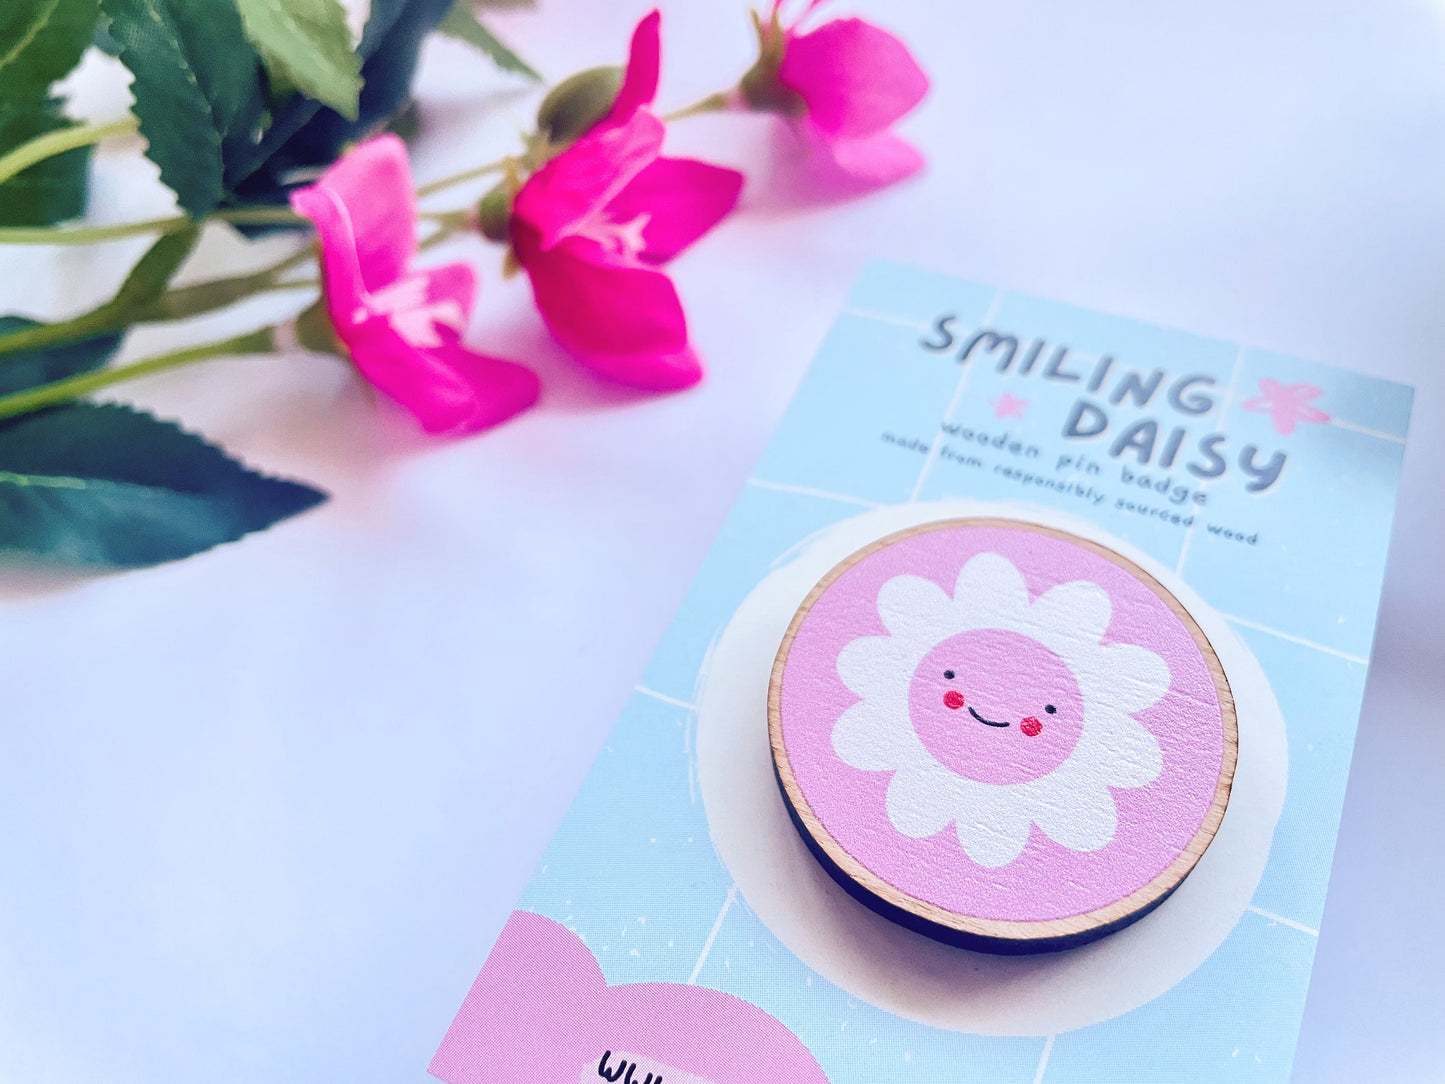 Smiling Daisy Wooden Pin Badge